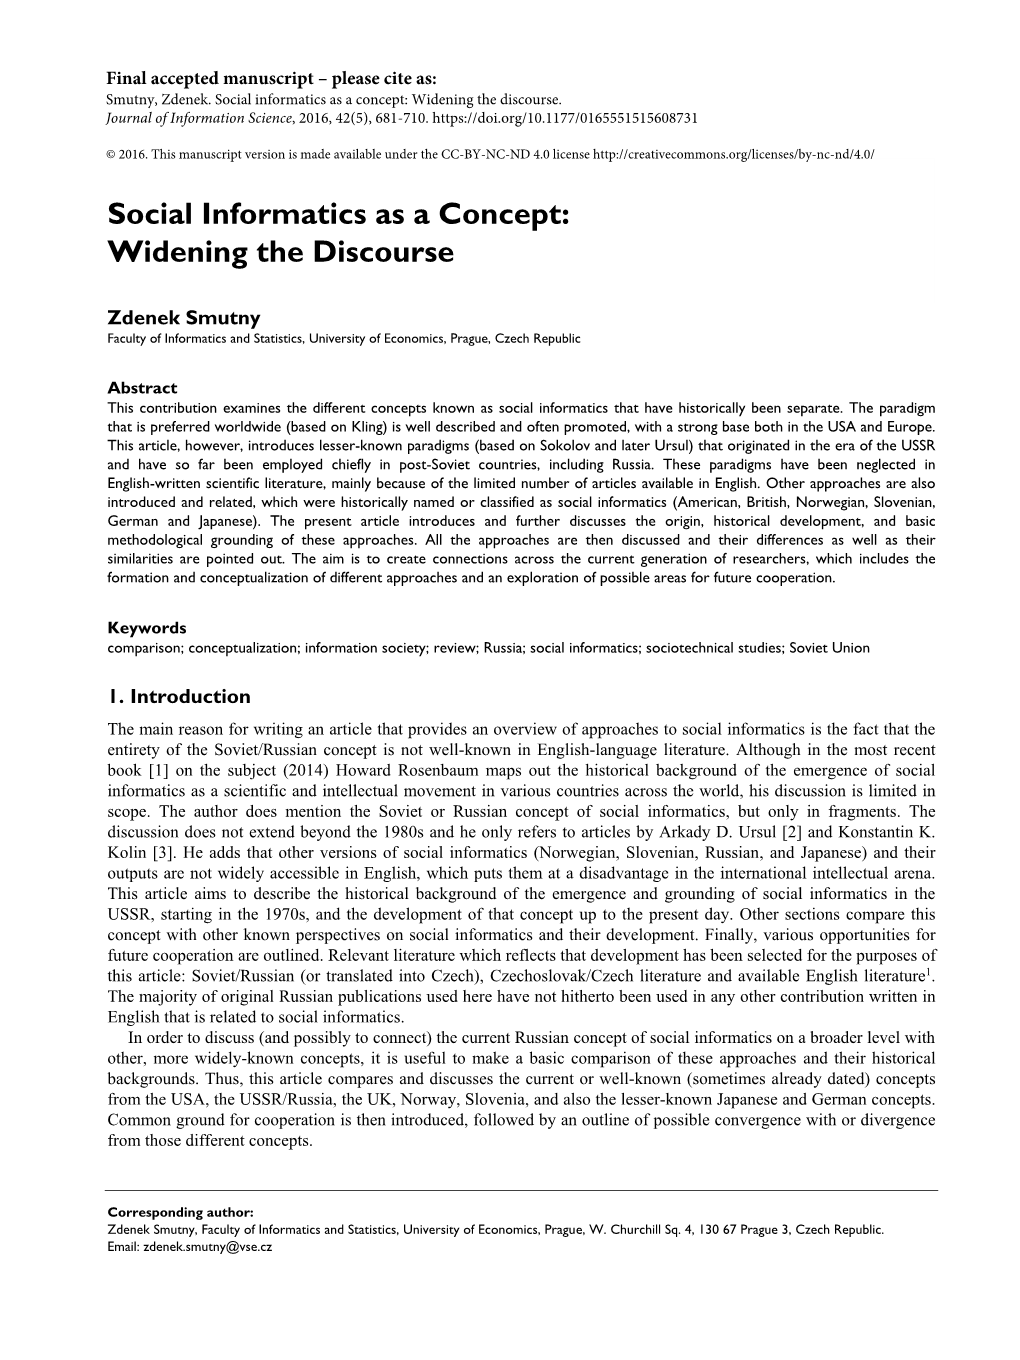 Social Informatics As a Concept: Widening the Discourse